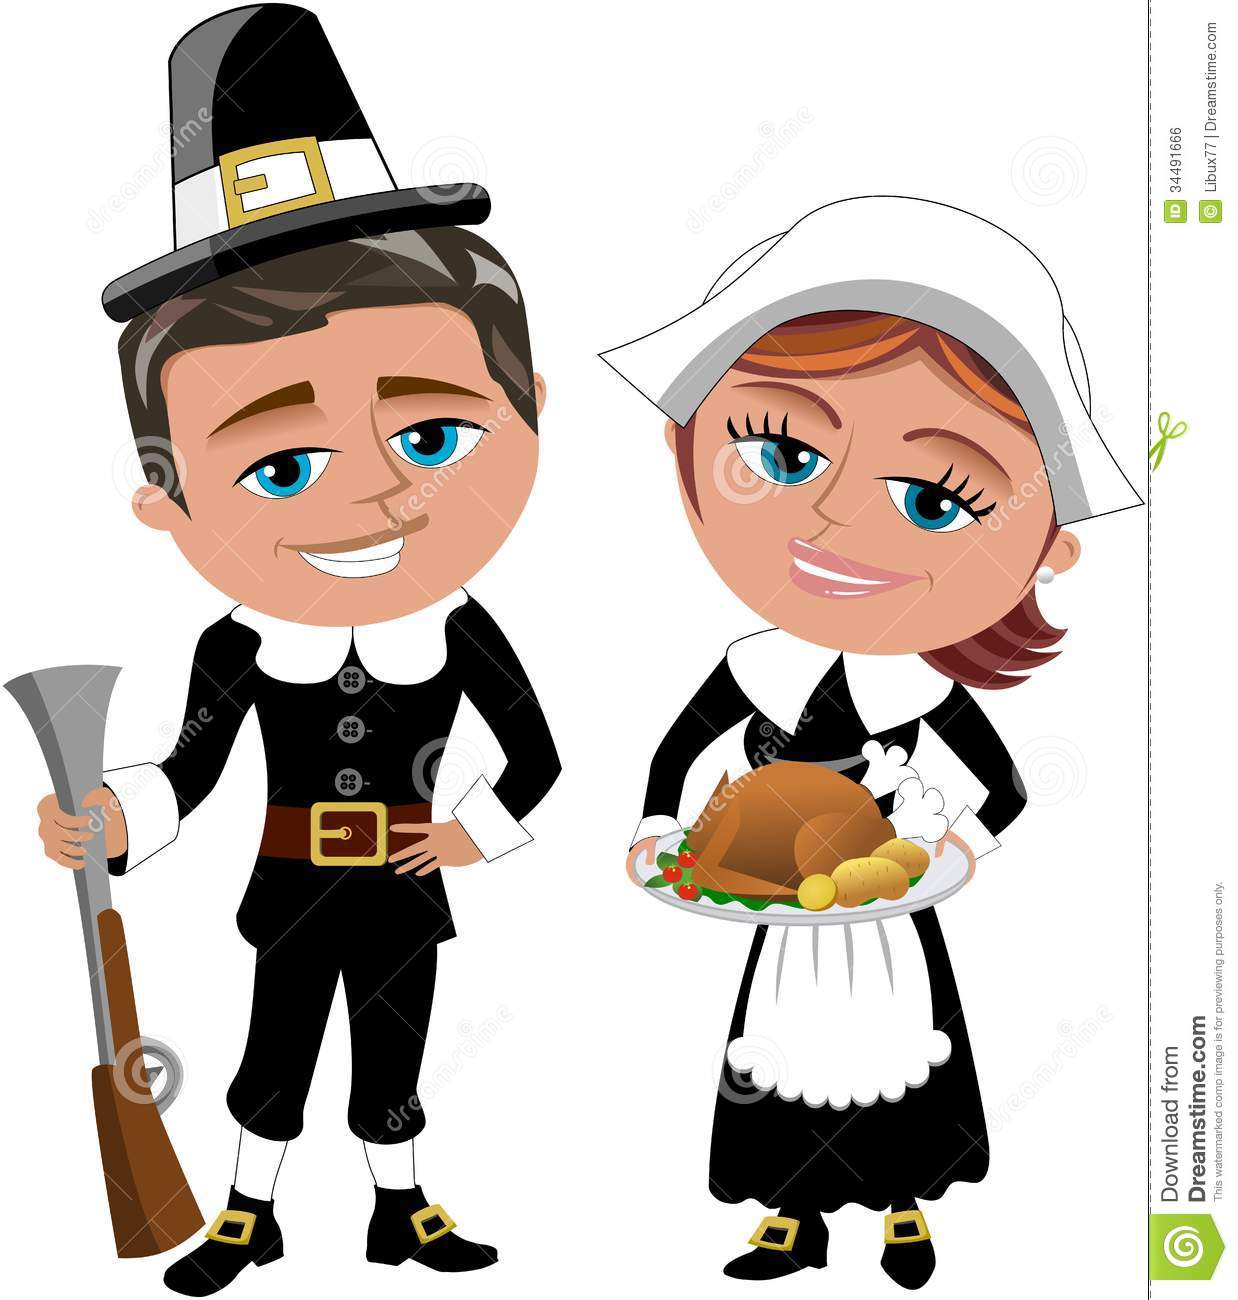 Happy Cartoon Pilgrims With Rifle And Roast Turkey Royalty Free Stock